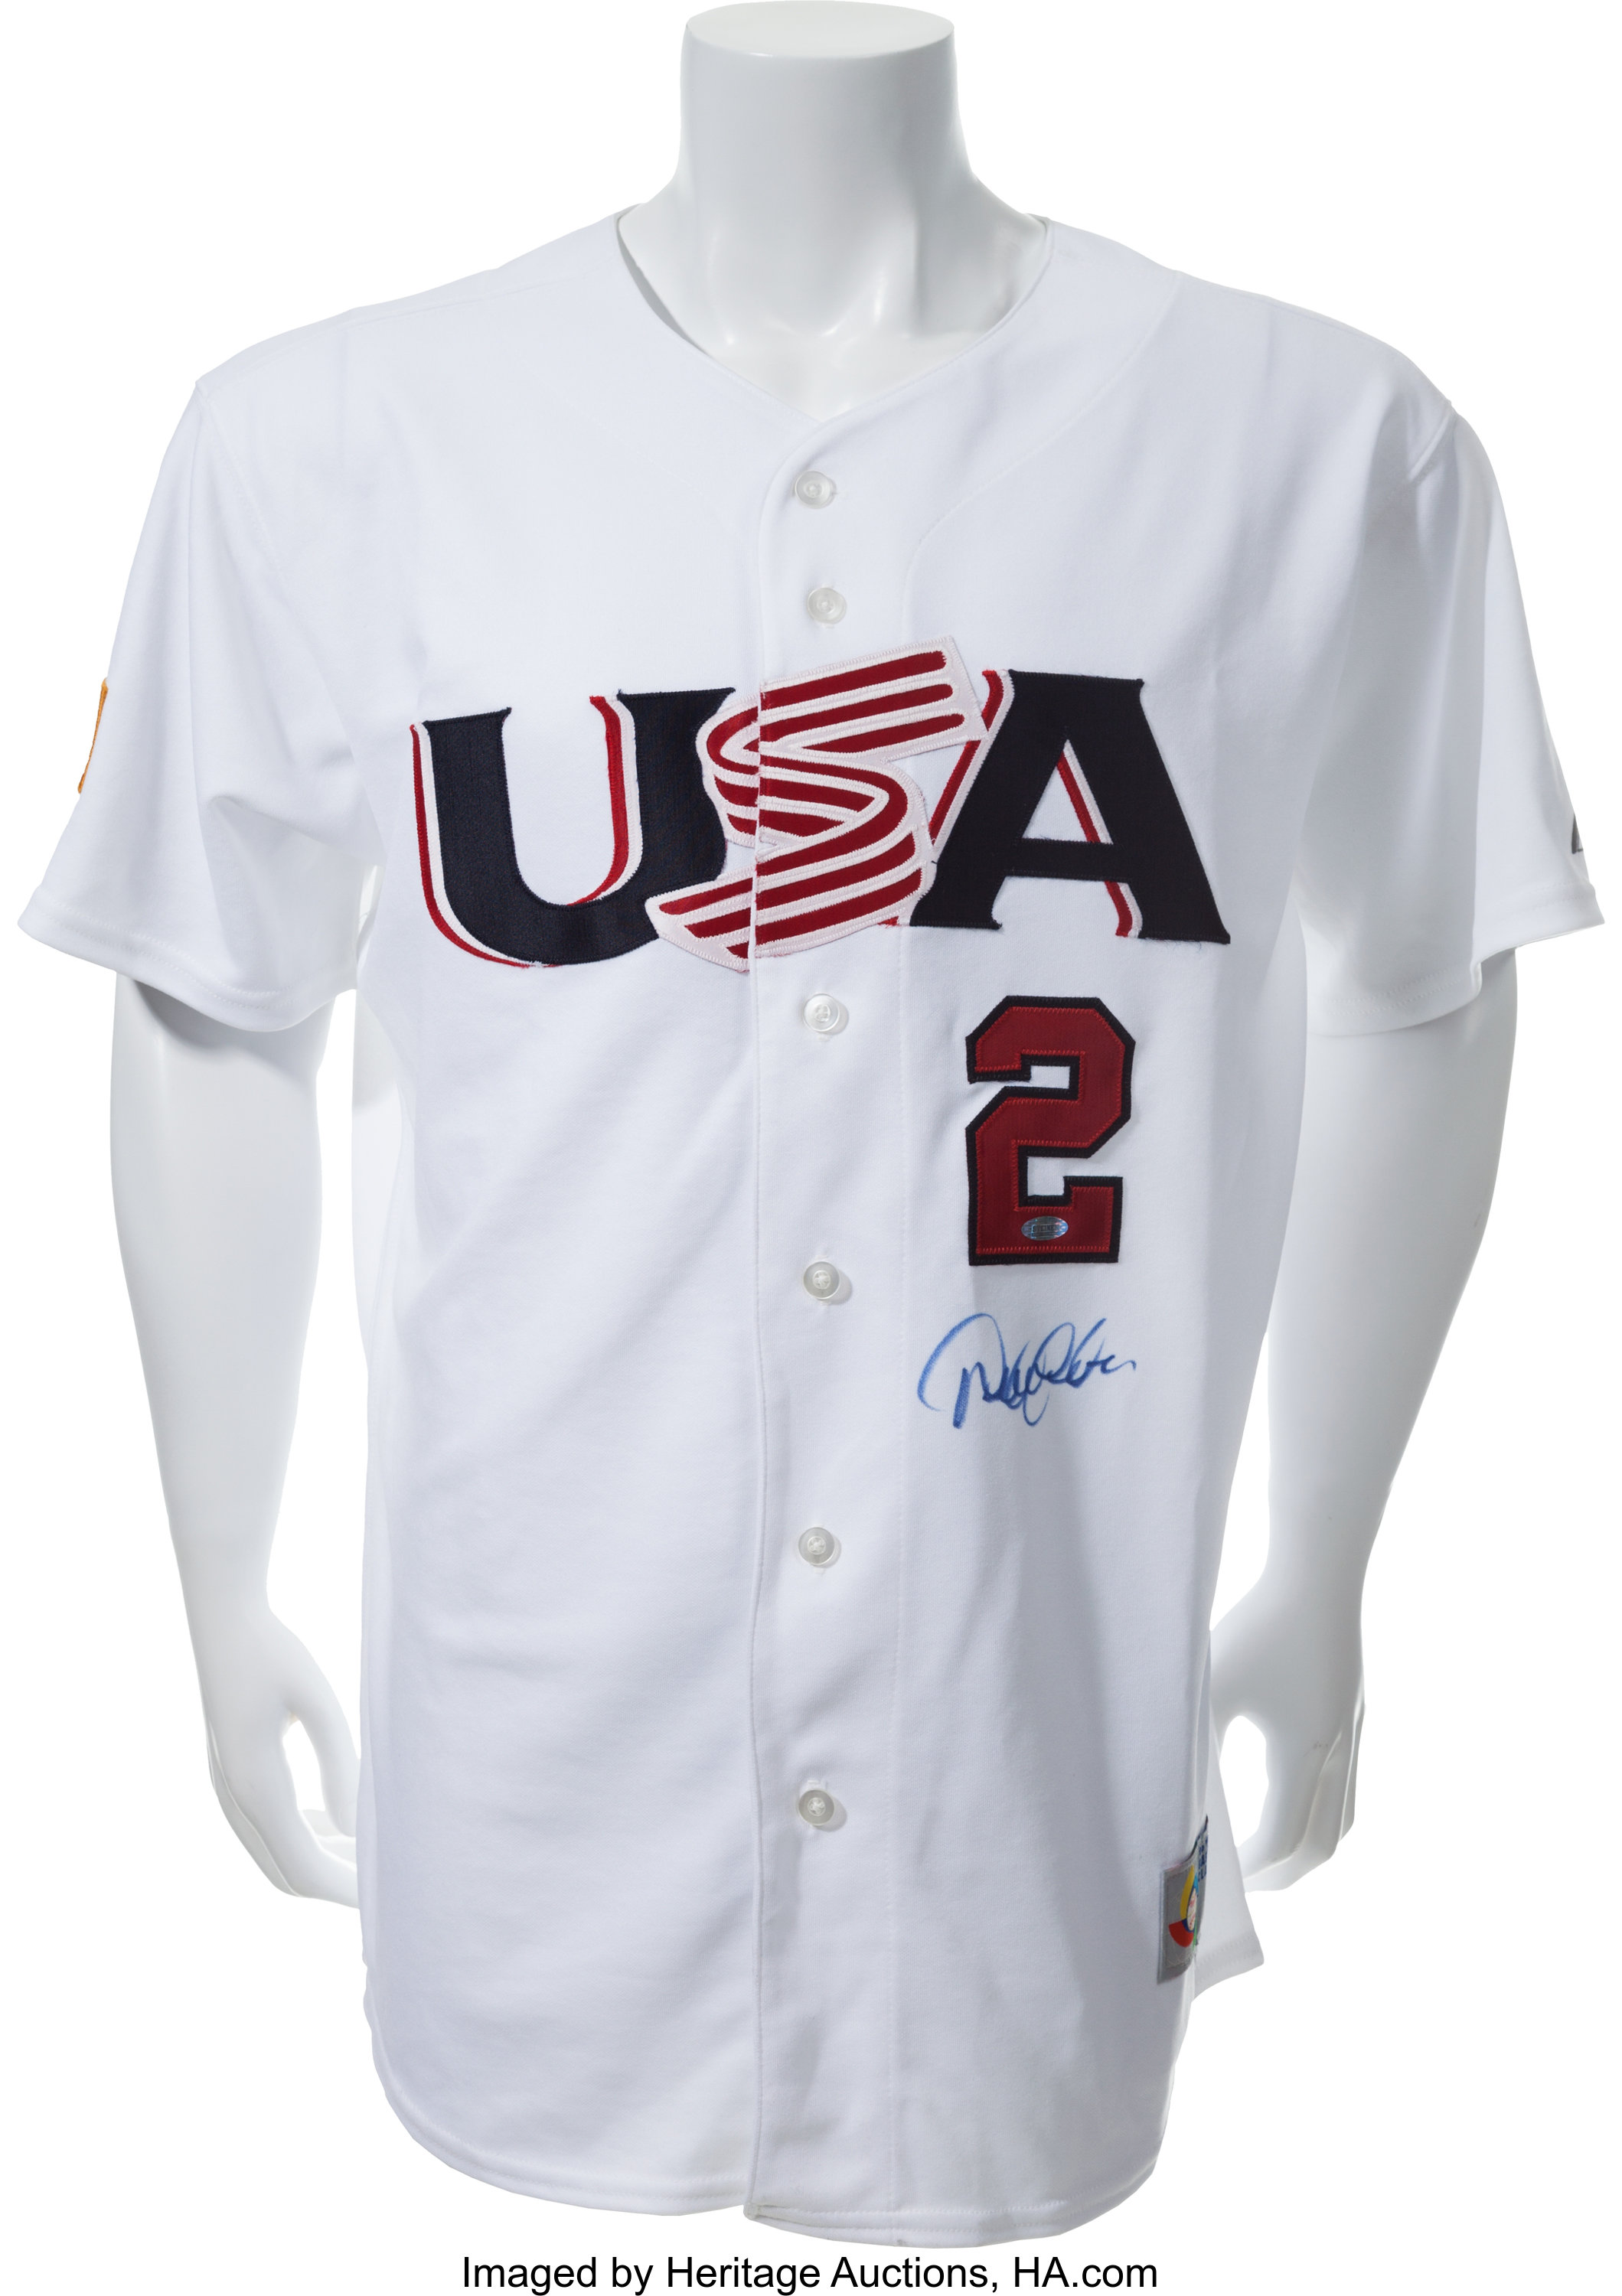 2006 Derek Jeter Game Worn Uniform. Baseball Collectibles, Lot #81940